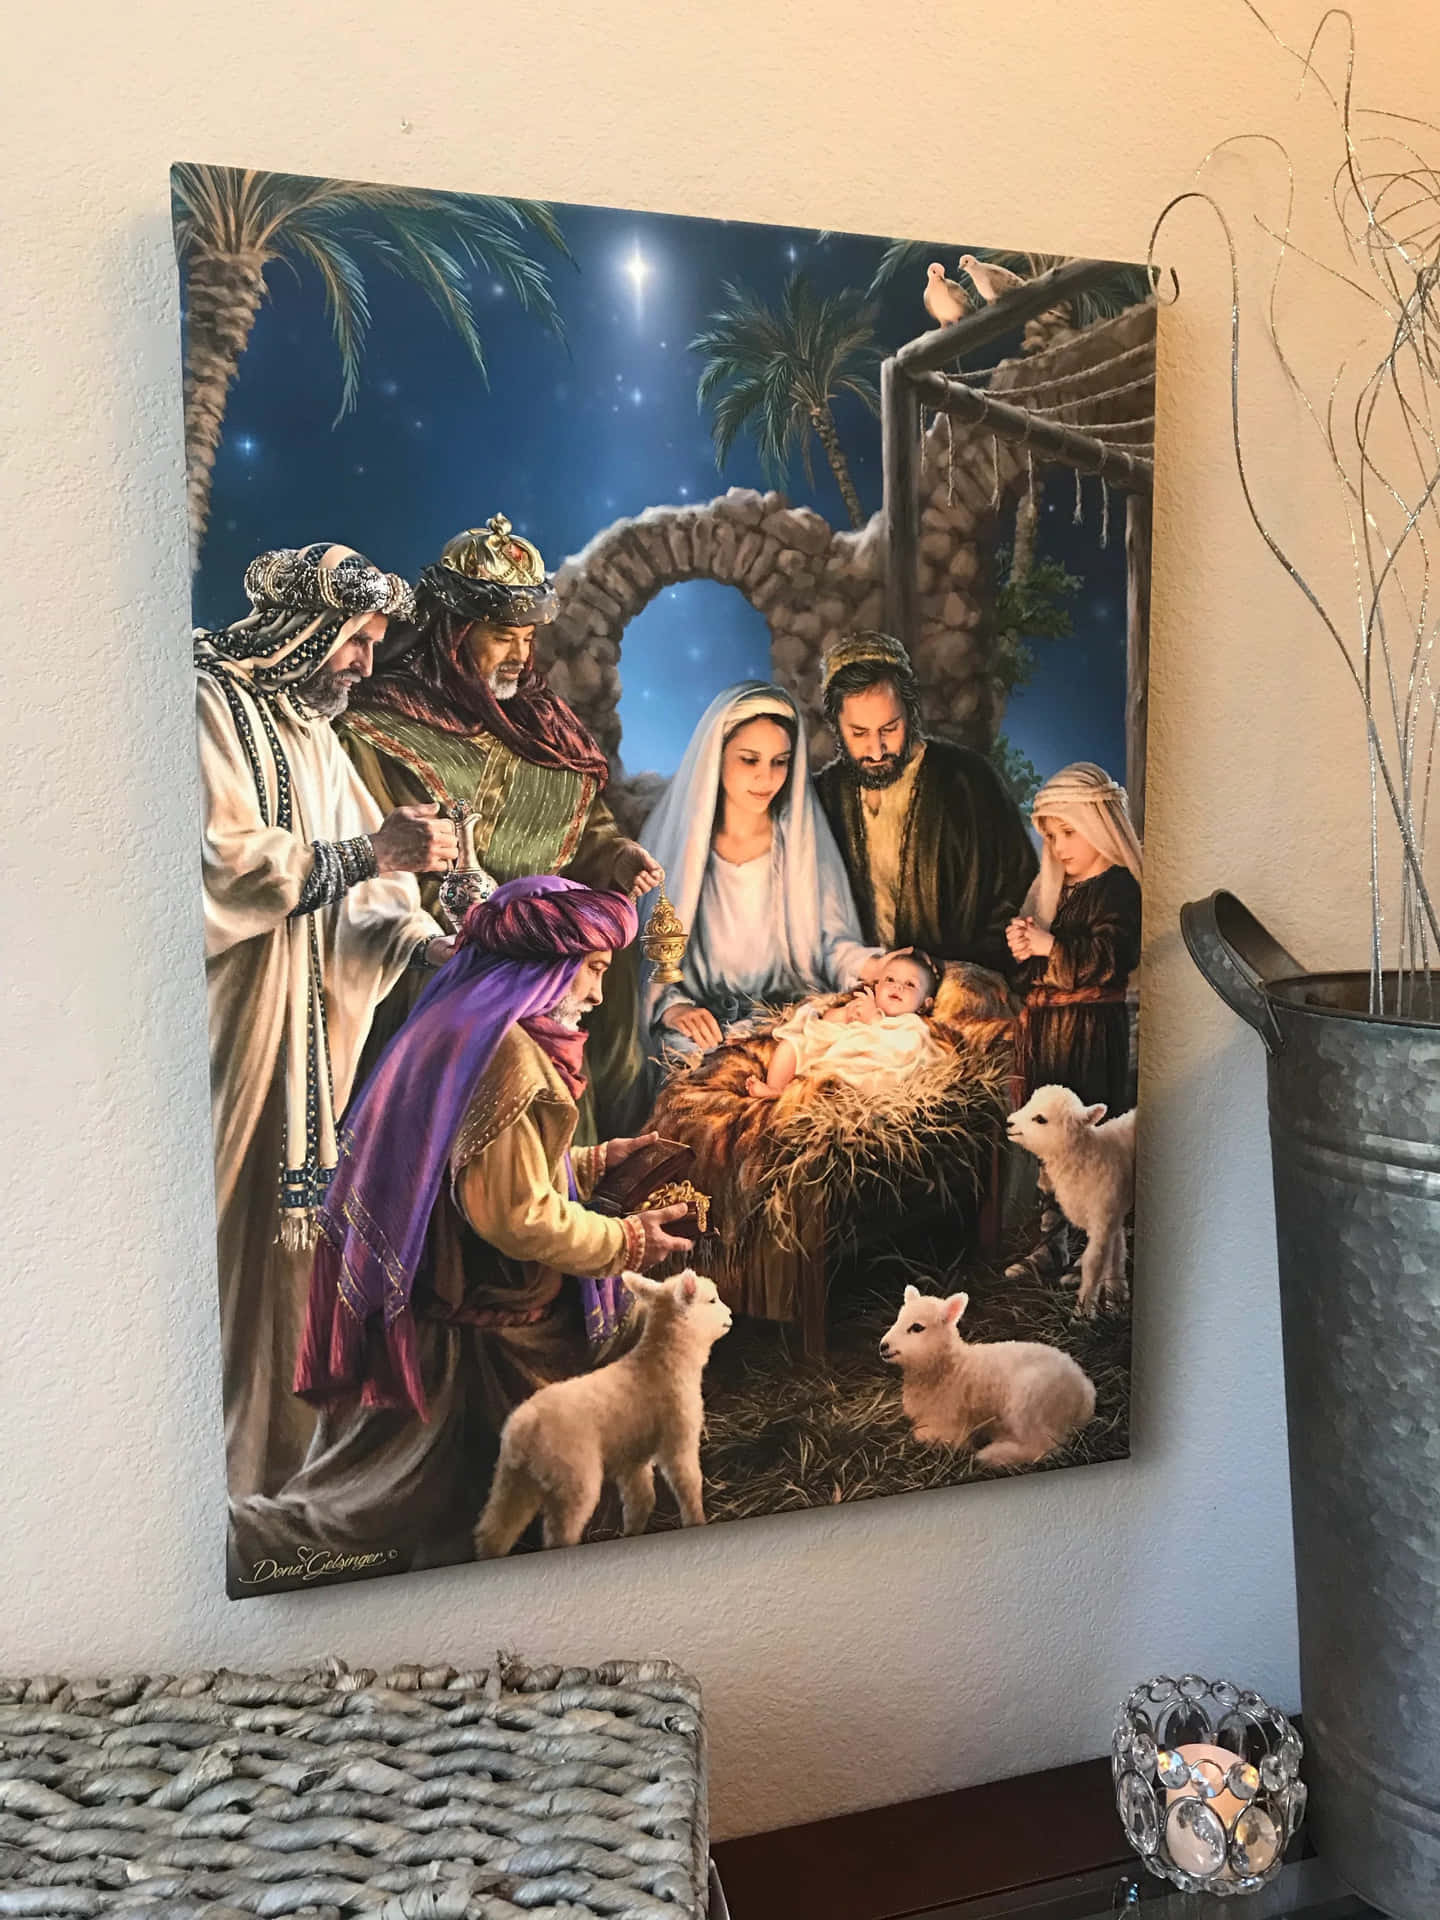 Celebrating Nativity with Joy